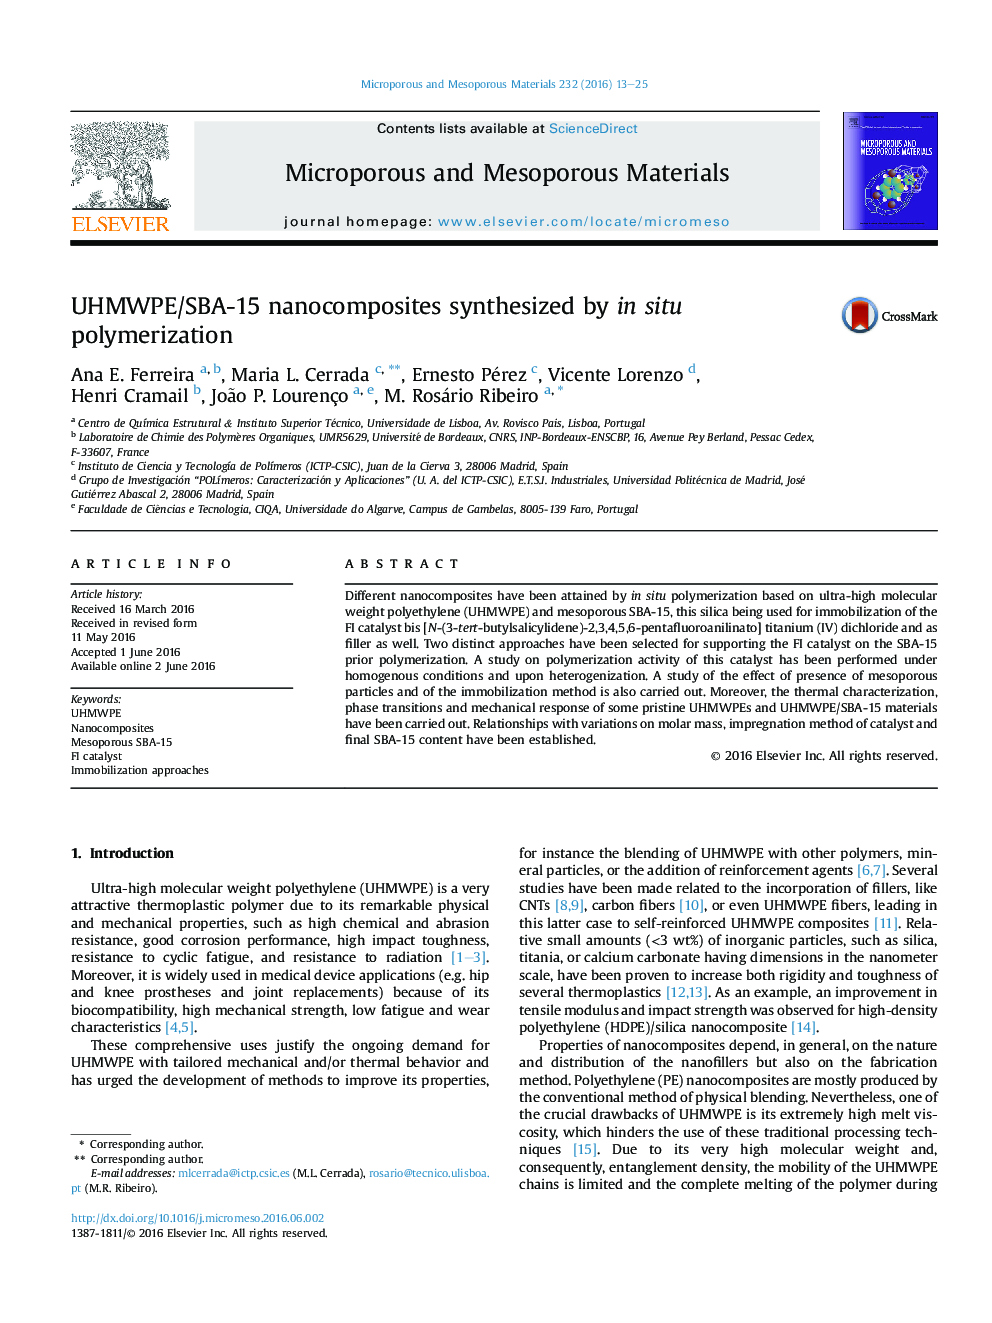 UHMWPE/SBA-15 nanocomposites synthesized by in situ polymerization